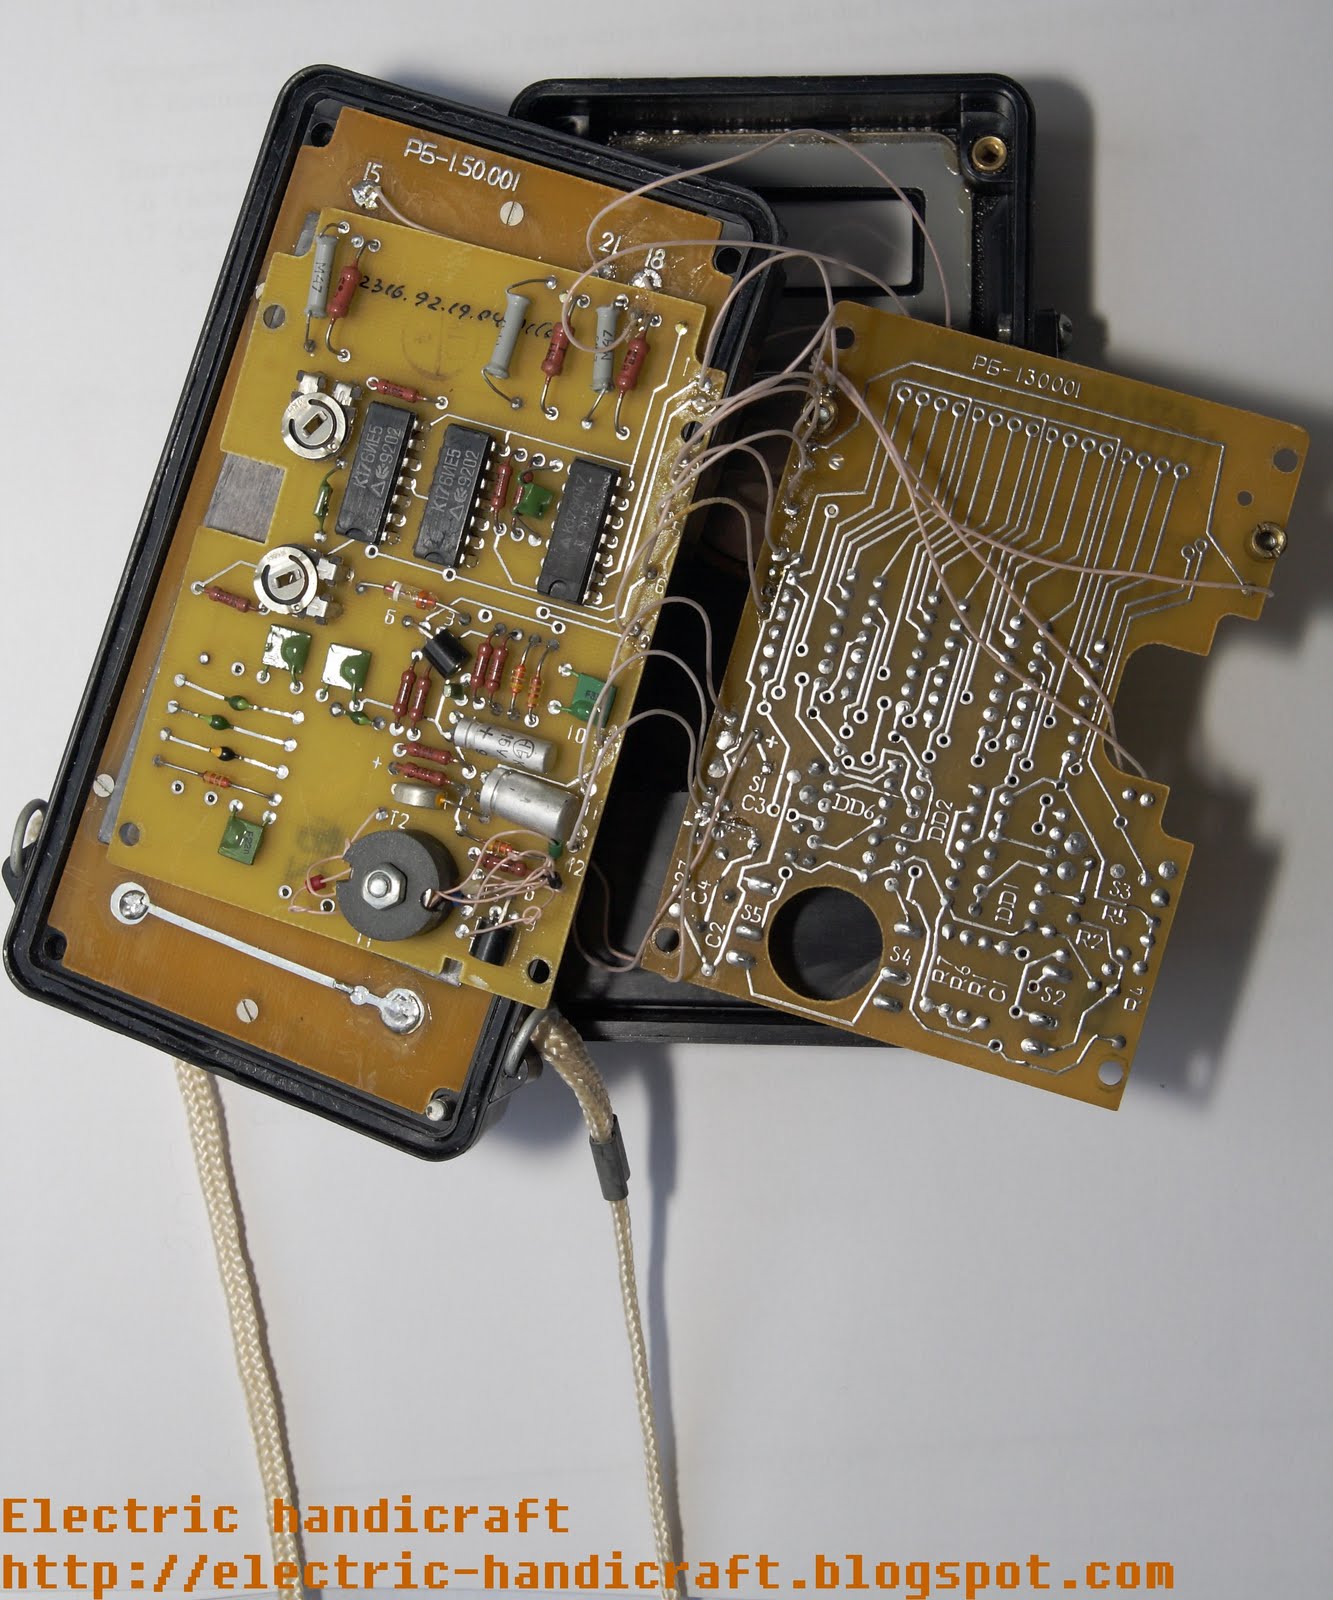 Electric handicraft: Old dosimeter disassembled